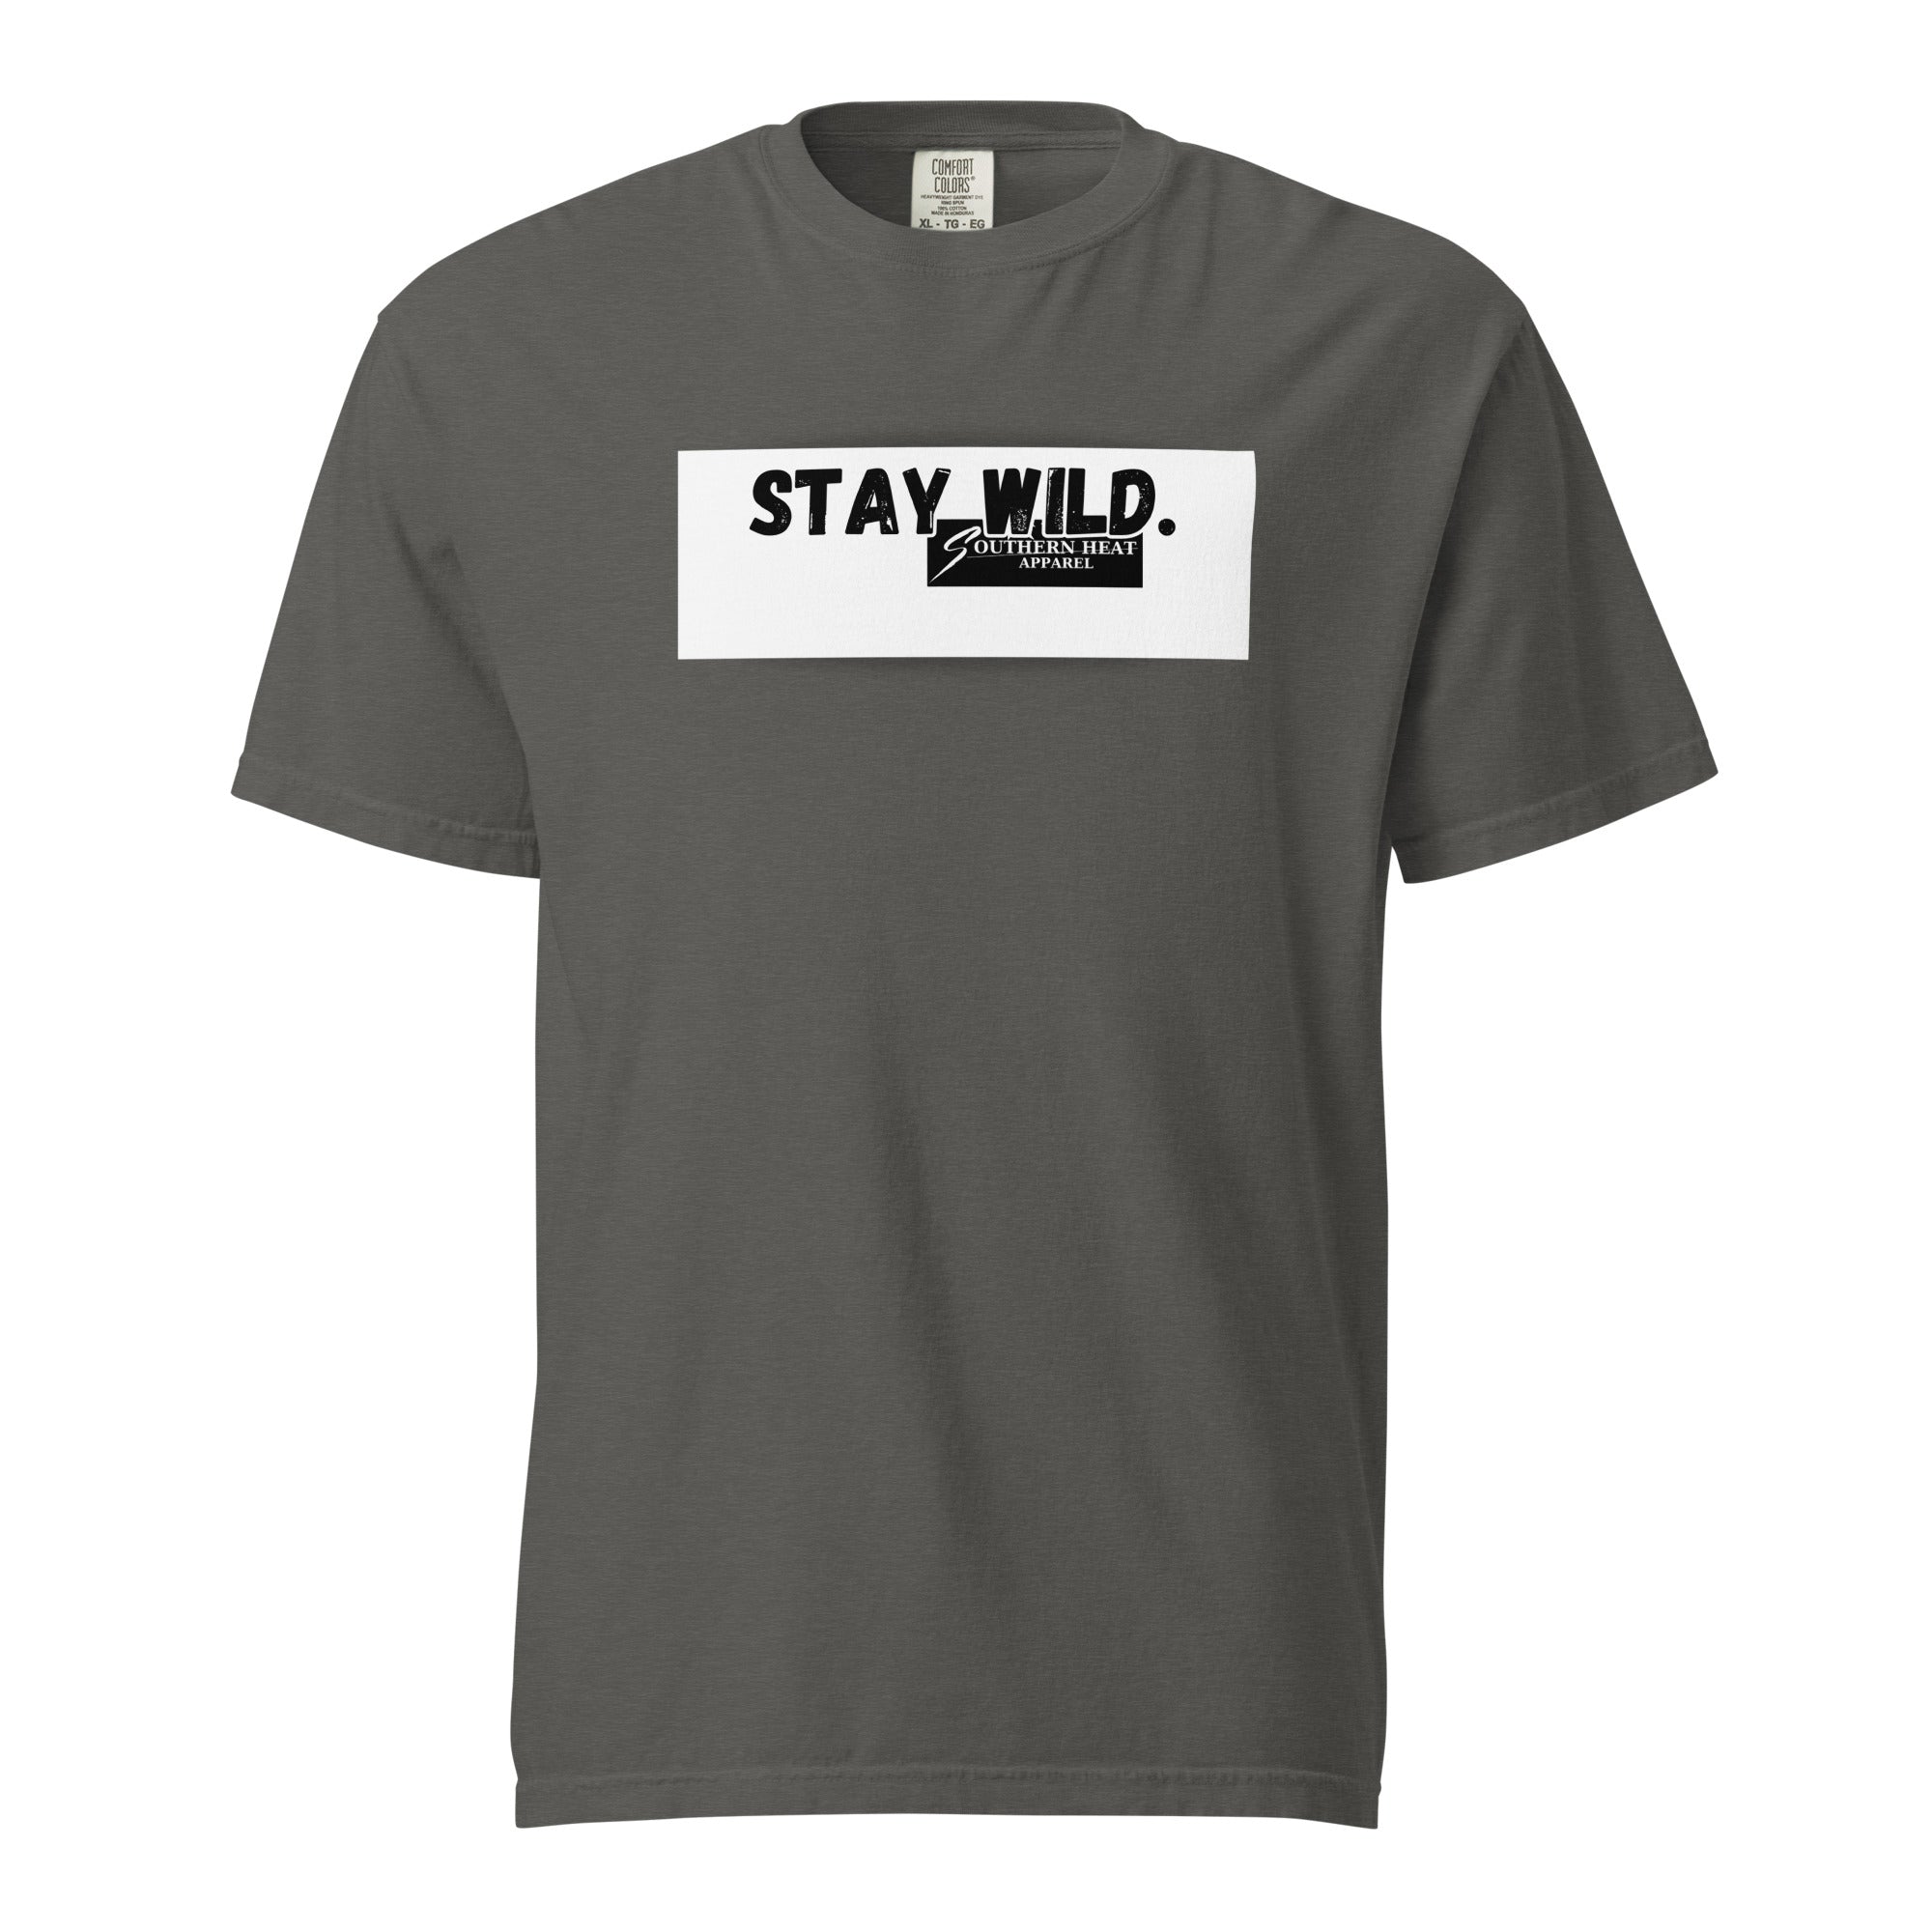 Stay wild- garment-dyed heavyweight t-shirt